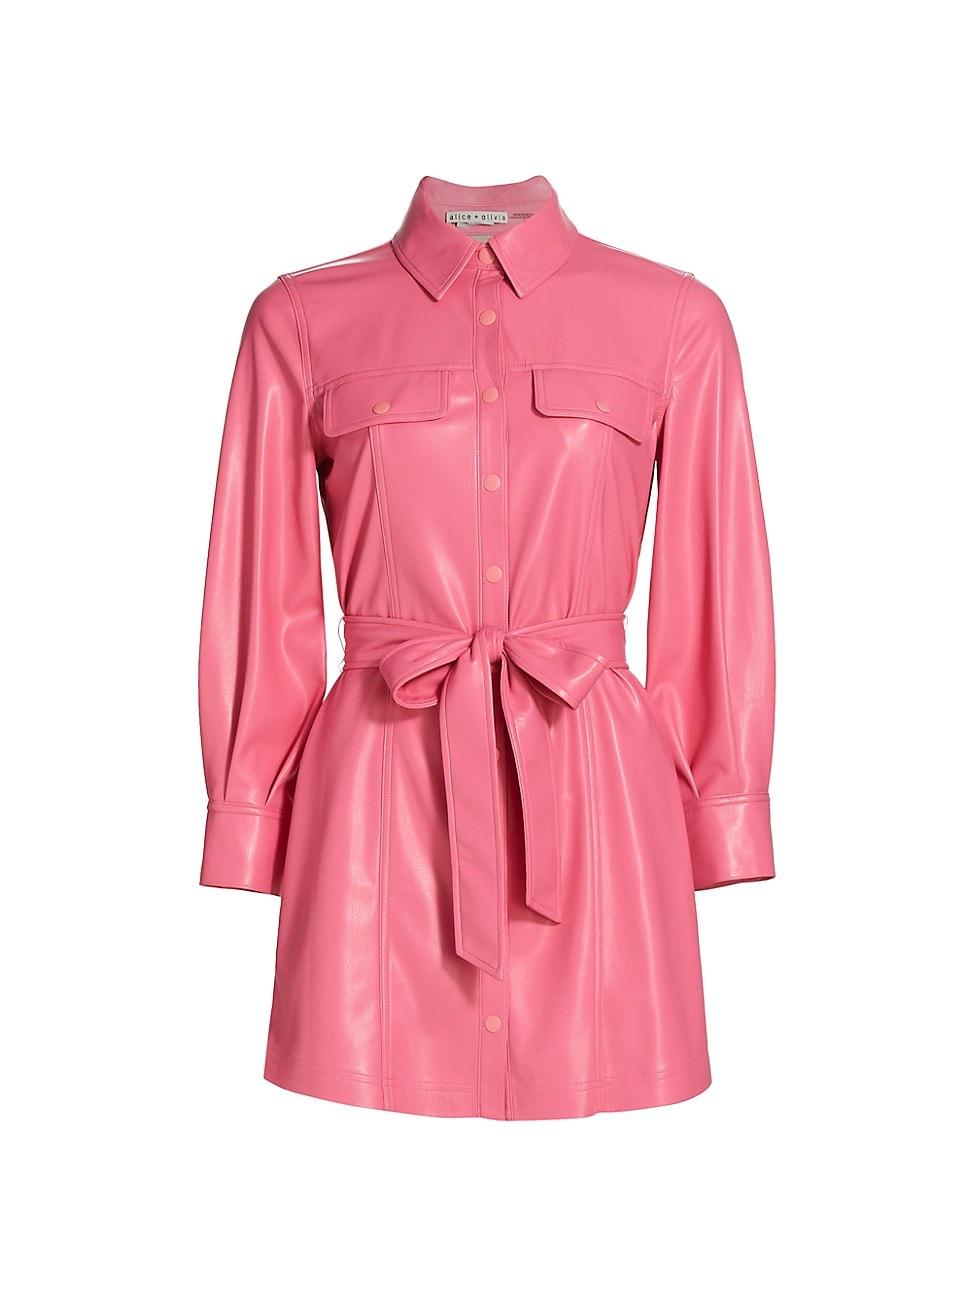 Alice + Olivia Miranda Vegan Leather Belted Shirtdress in Pink | Lyst